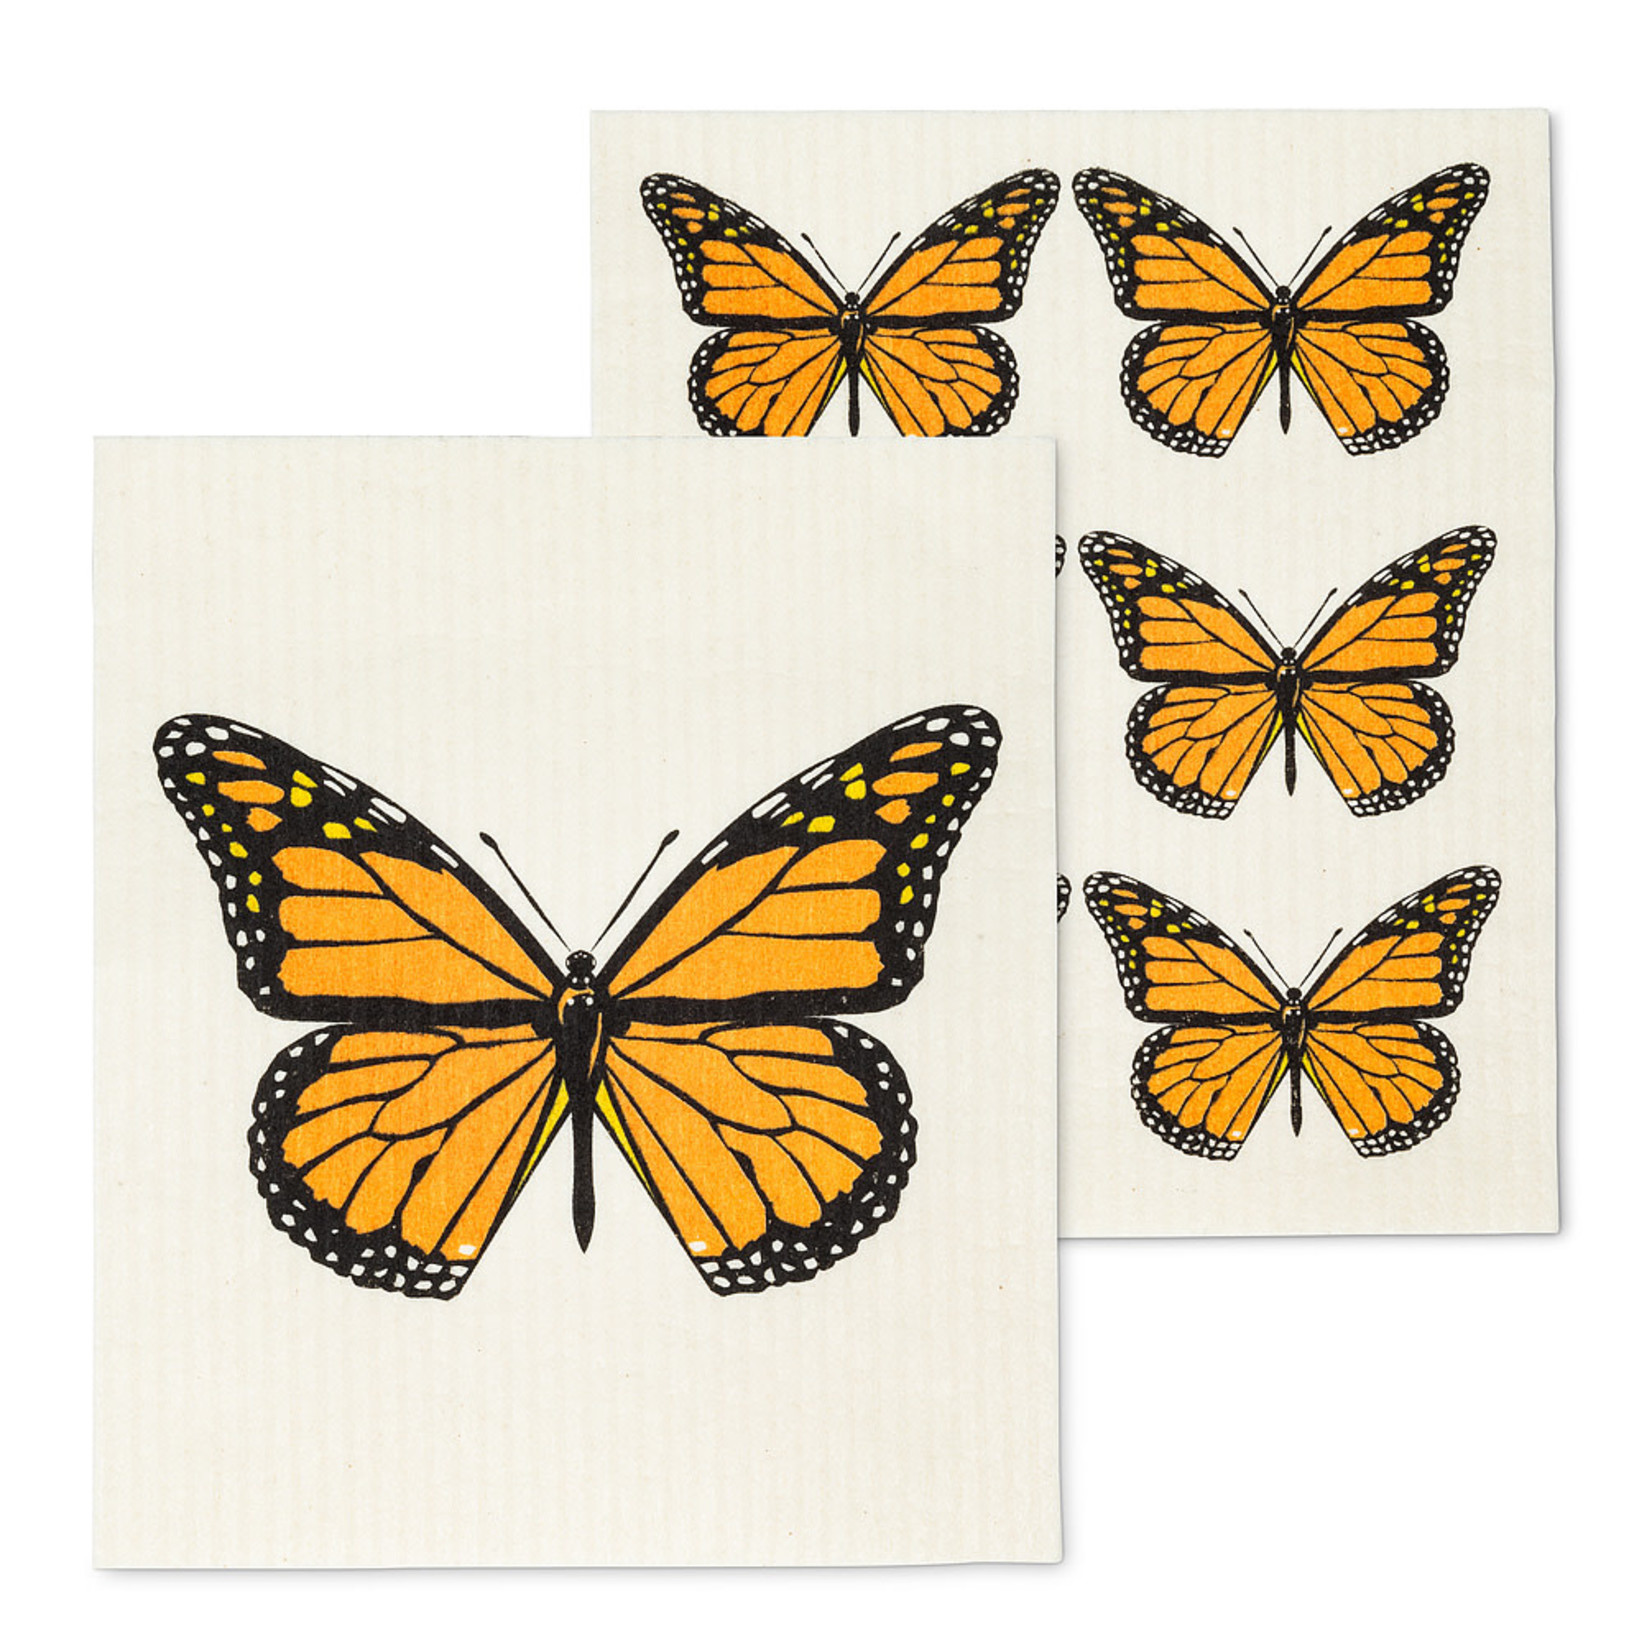 ABBOTT ABBOTT Swedish Dishcloth S/2 - Monarch Butterfly